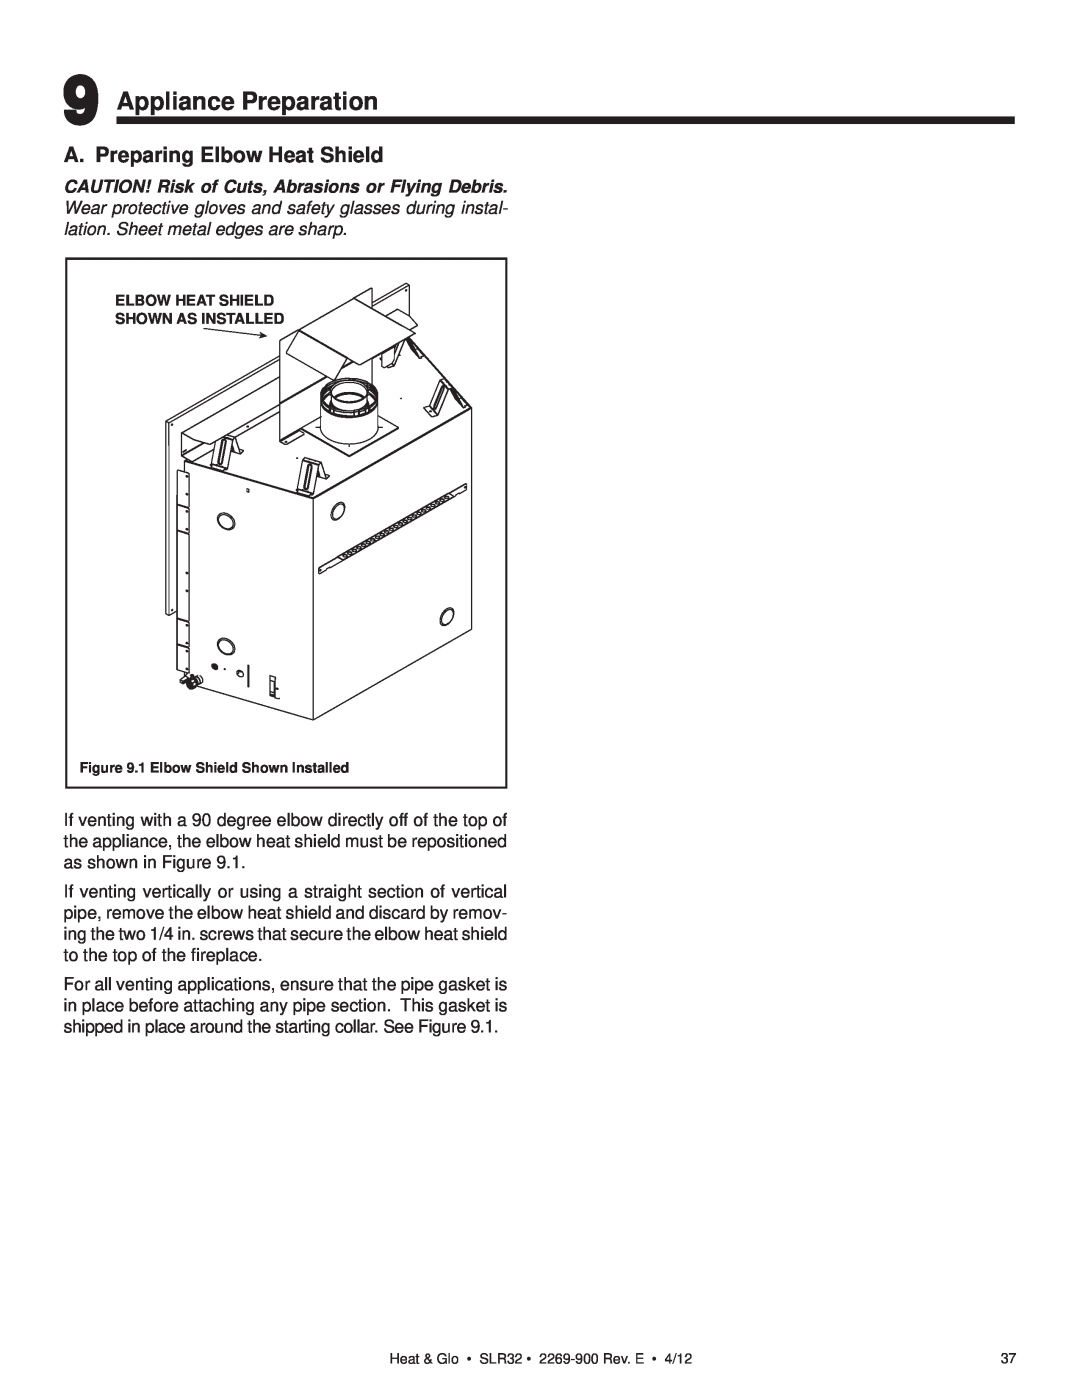 Heat & Glo LifeStyle SLR32 owner manual Appliance Preparation, A. Preparing Elbow Heat Shield 